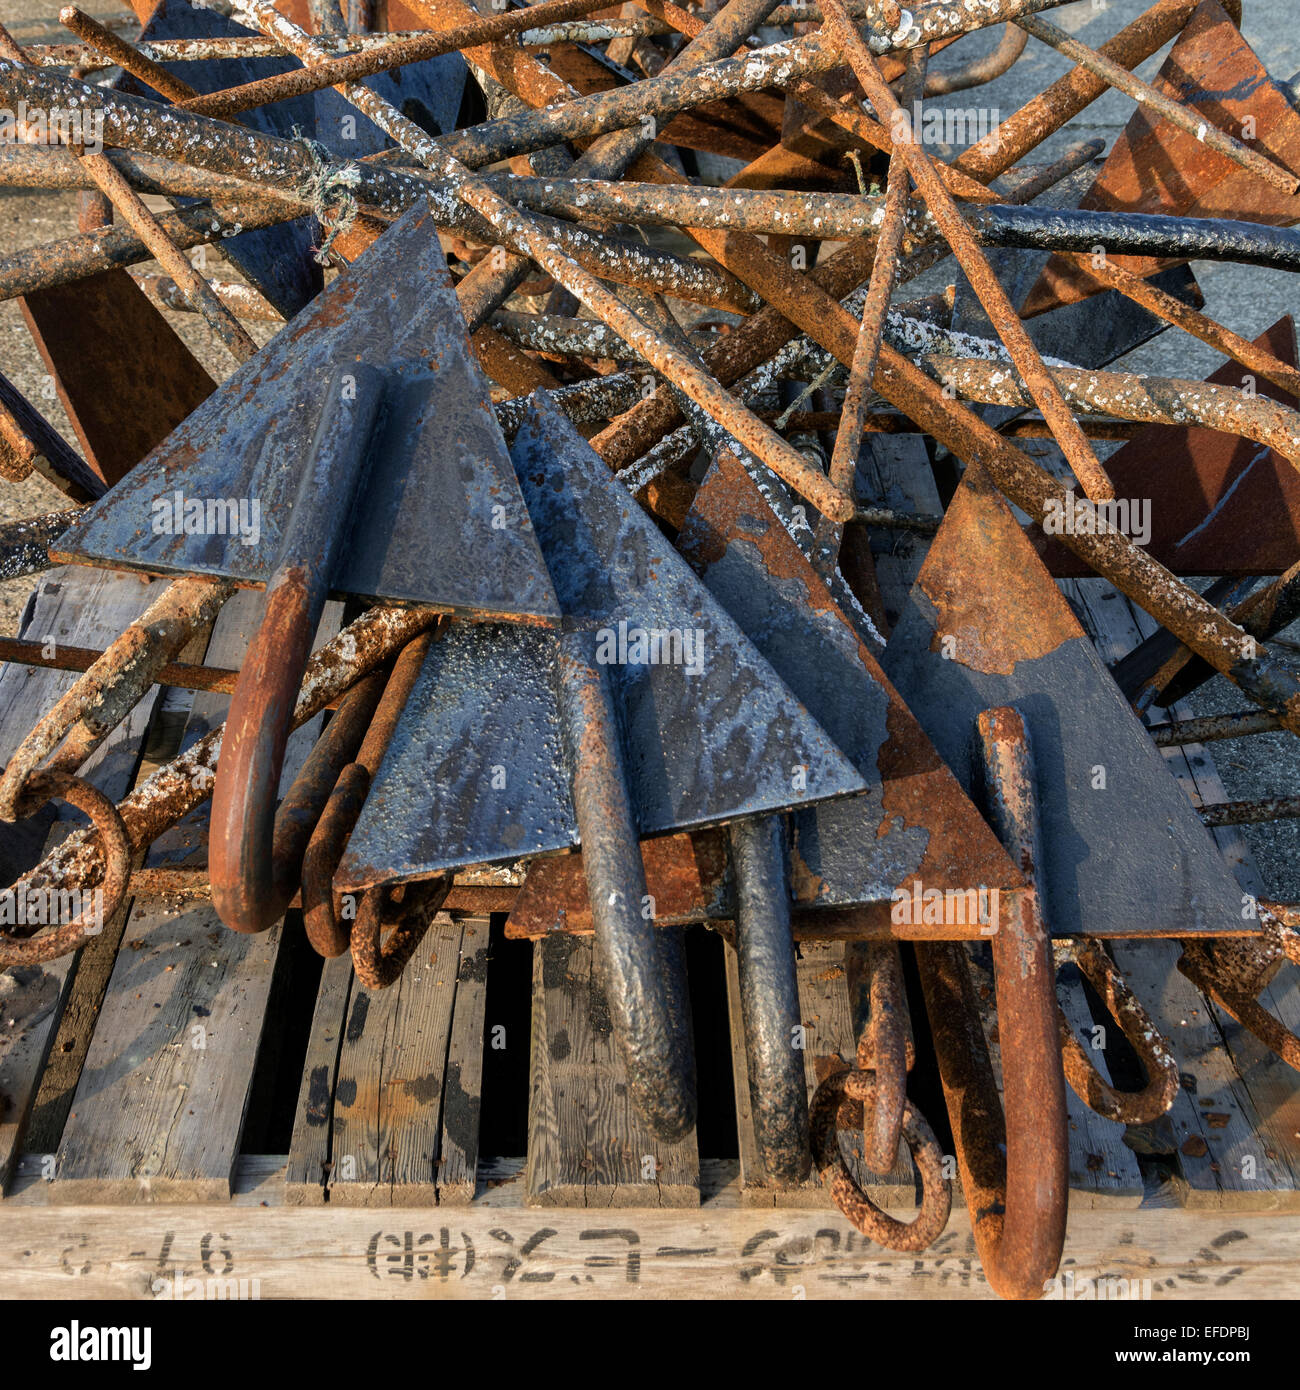 Pile of rusted, barnacle-encrusted anchors, Naruto Harbor, Shikoku Island, Japan Stock Photo